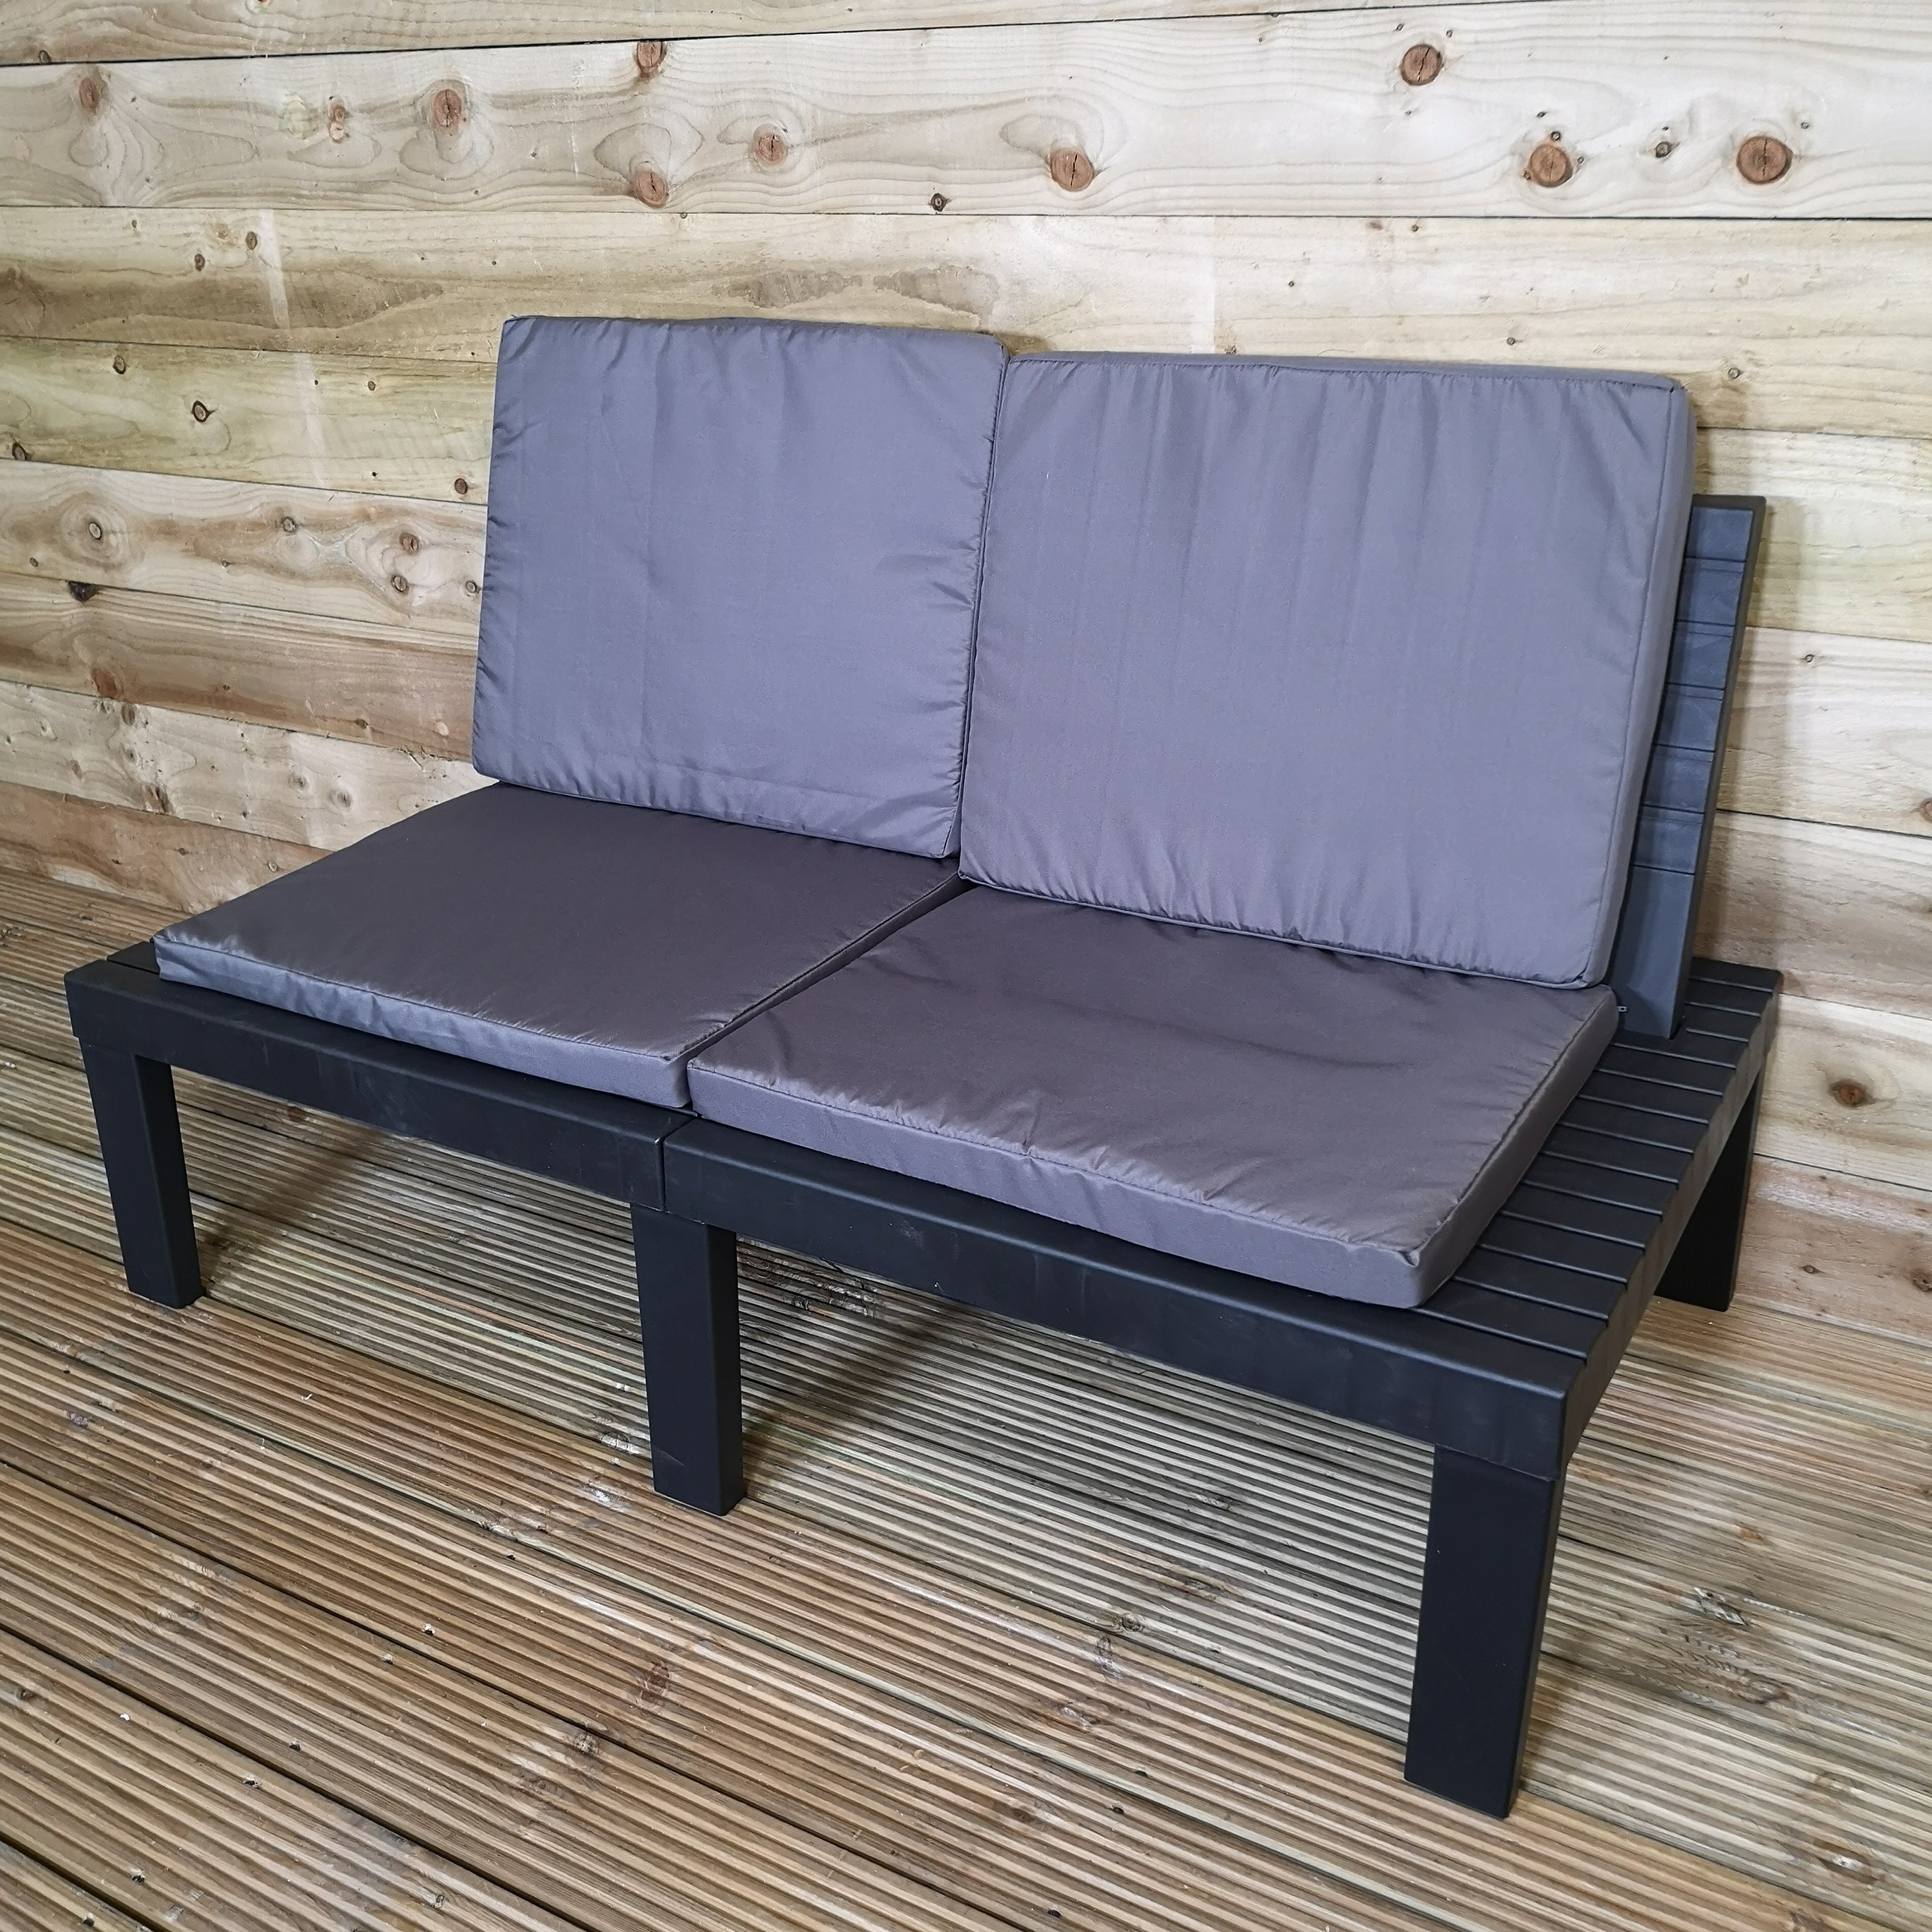 5pcs Plastic Modular Garden Furniture Set Sofa Chair Table and Grey Cushions